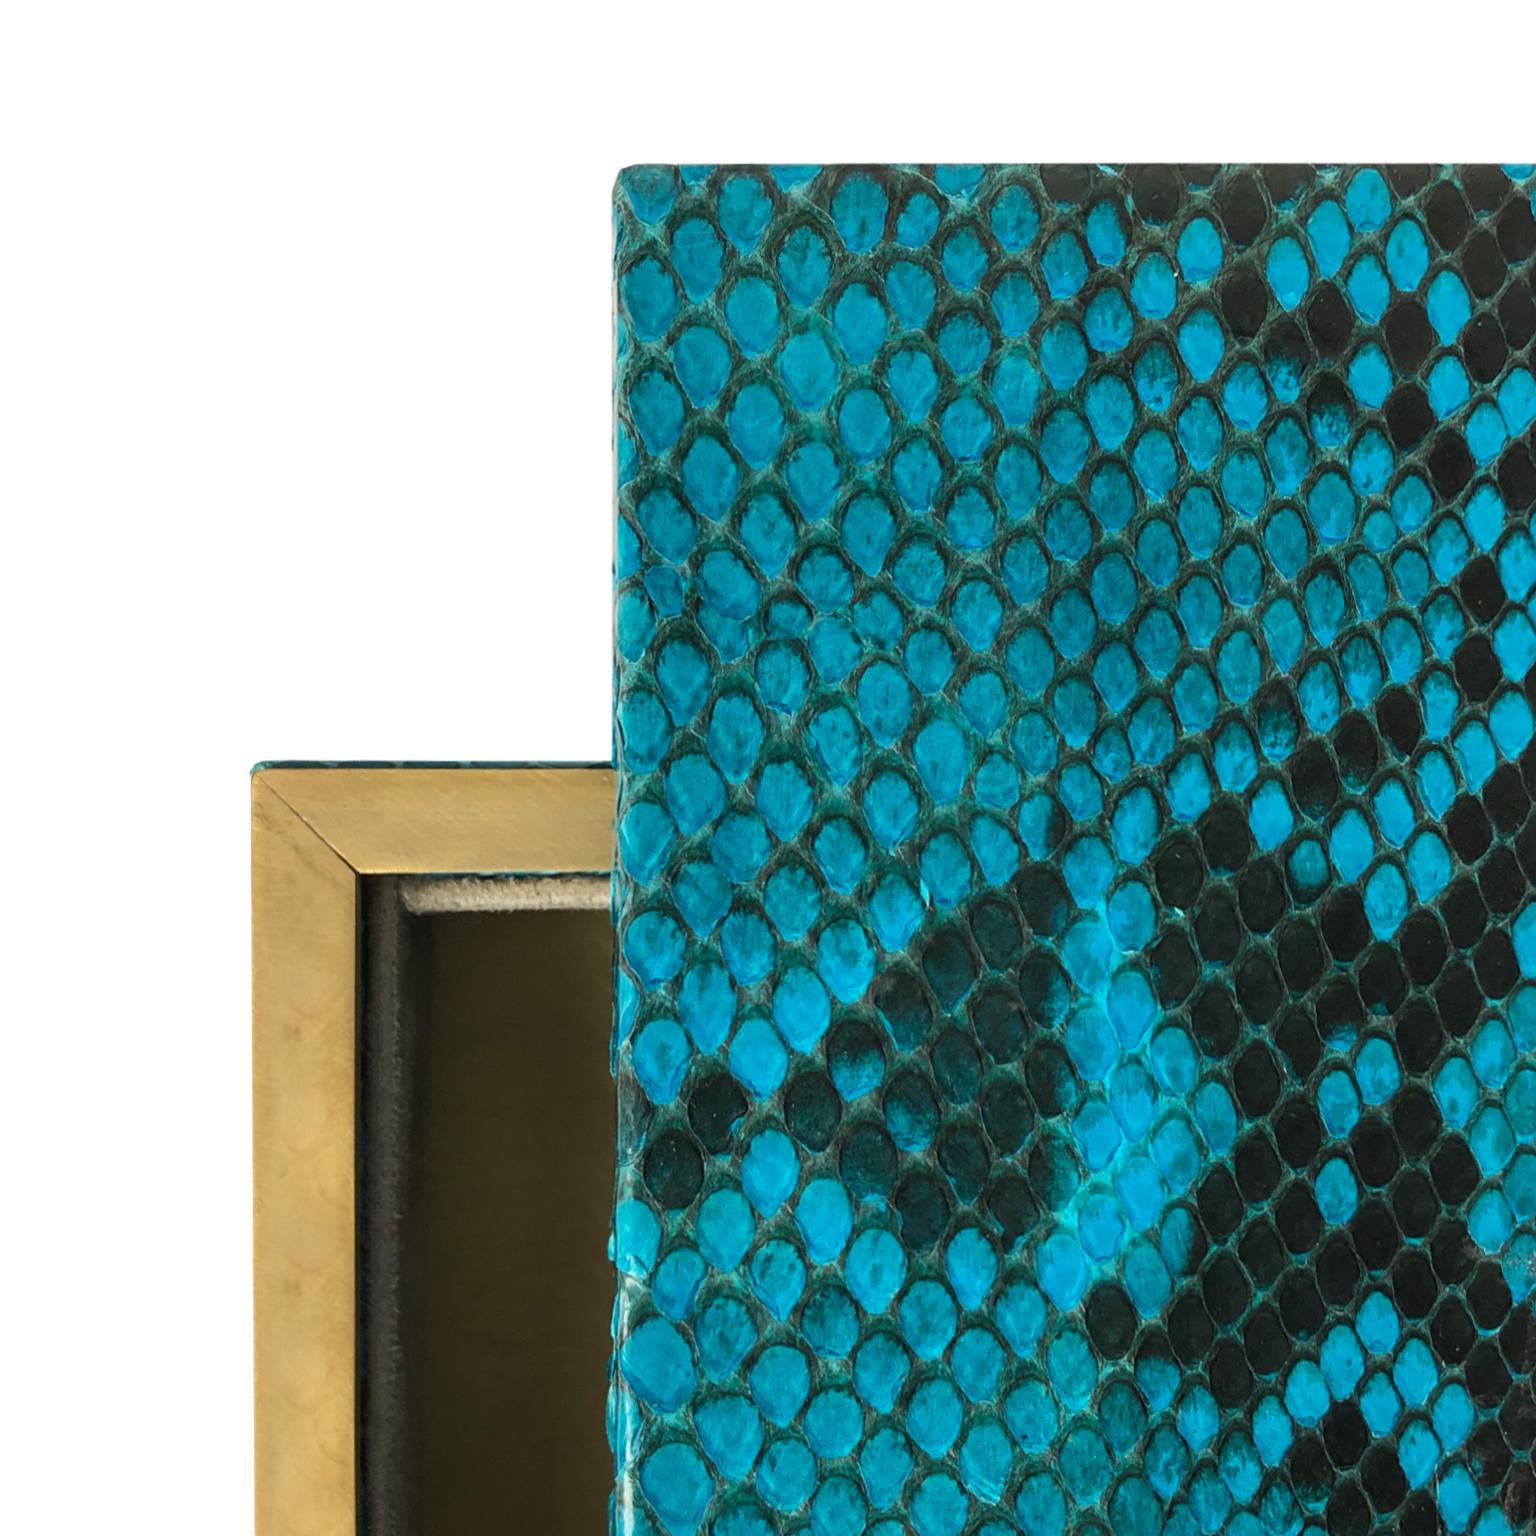 American Flair Home Collection Small Turquoise Python Box